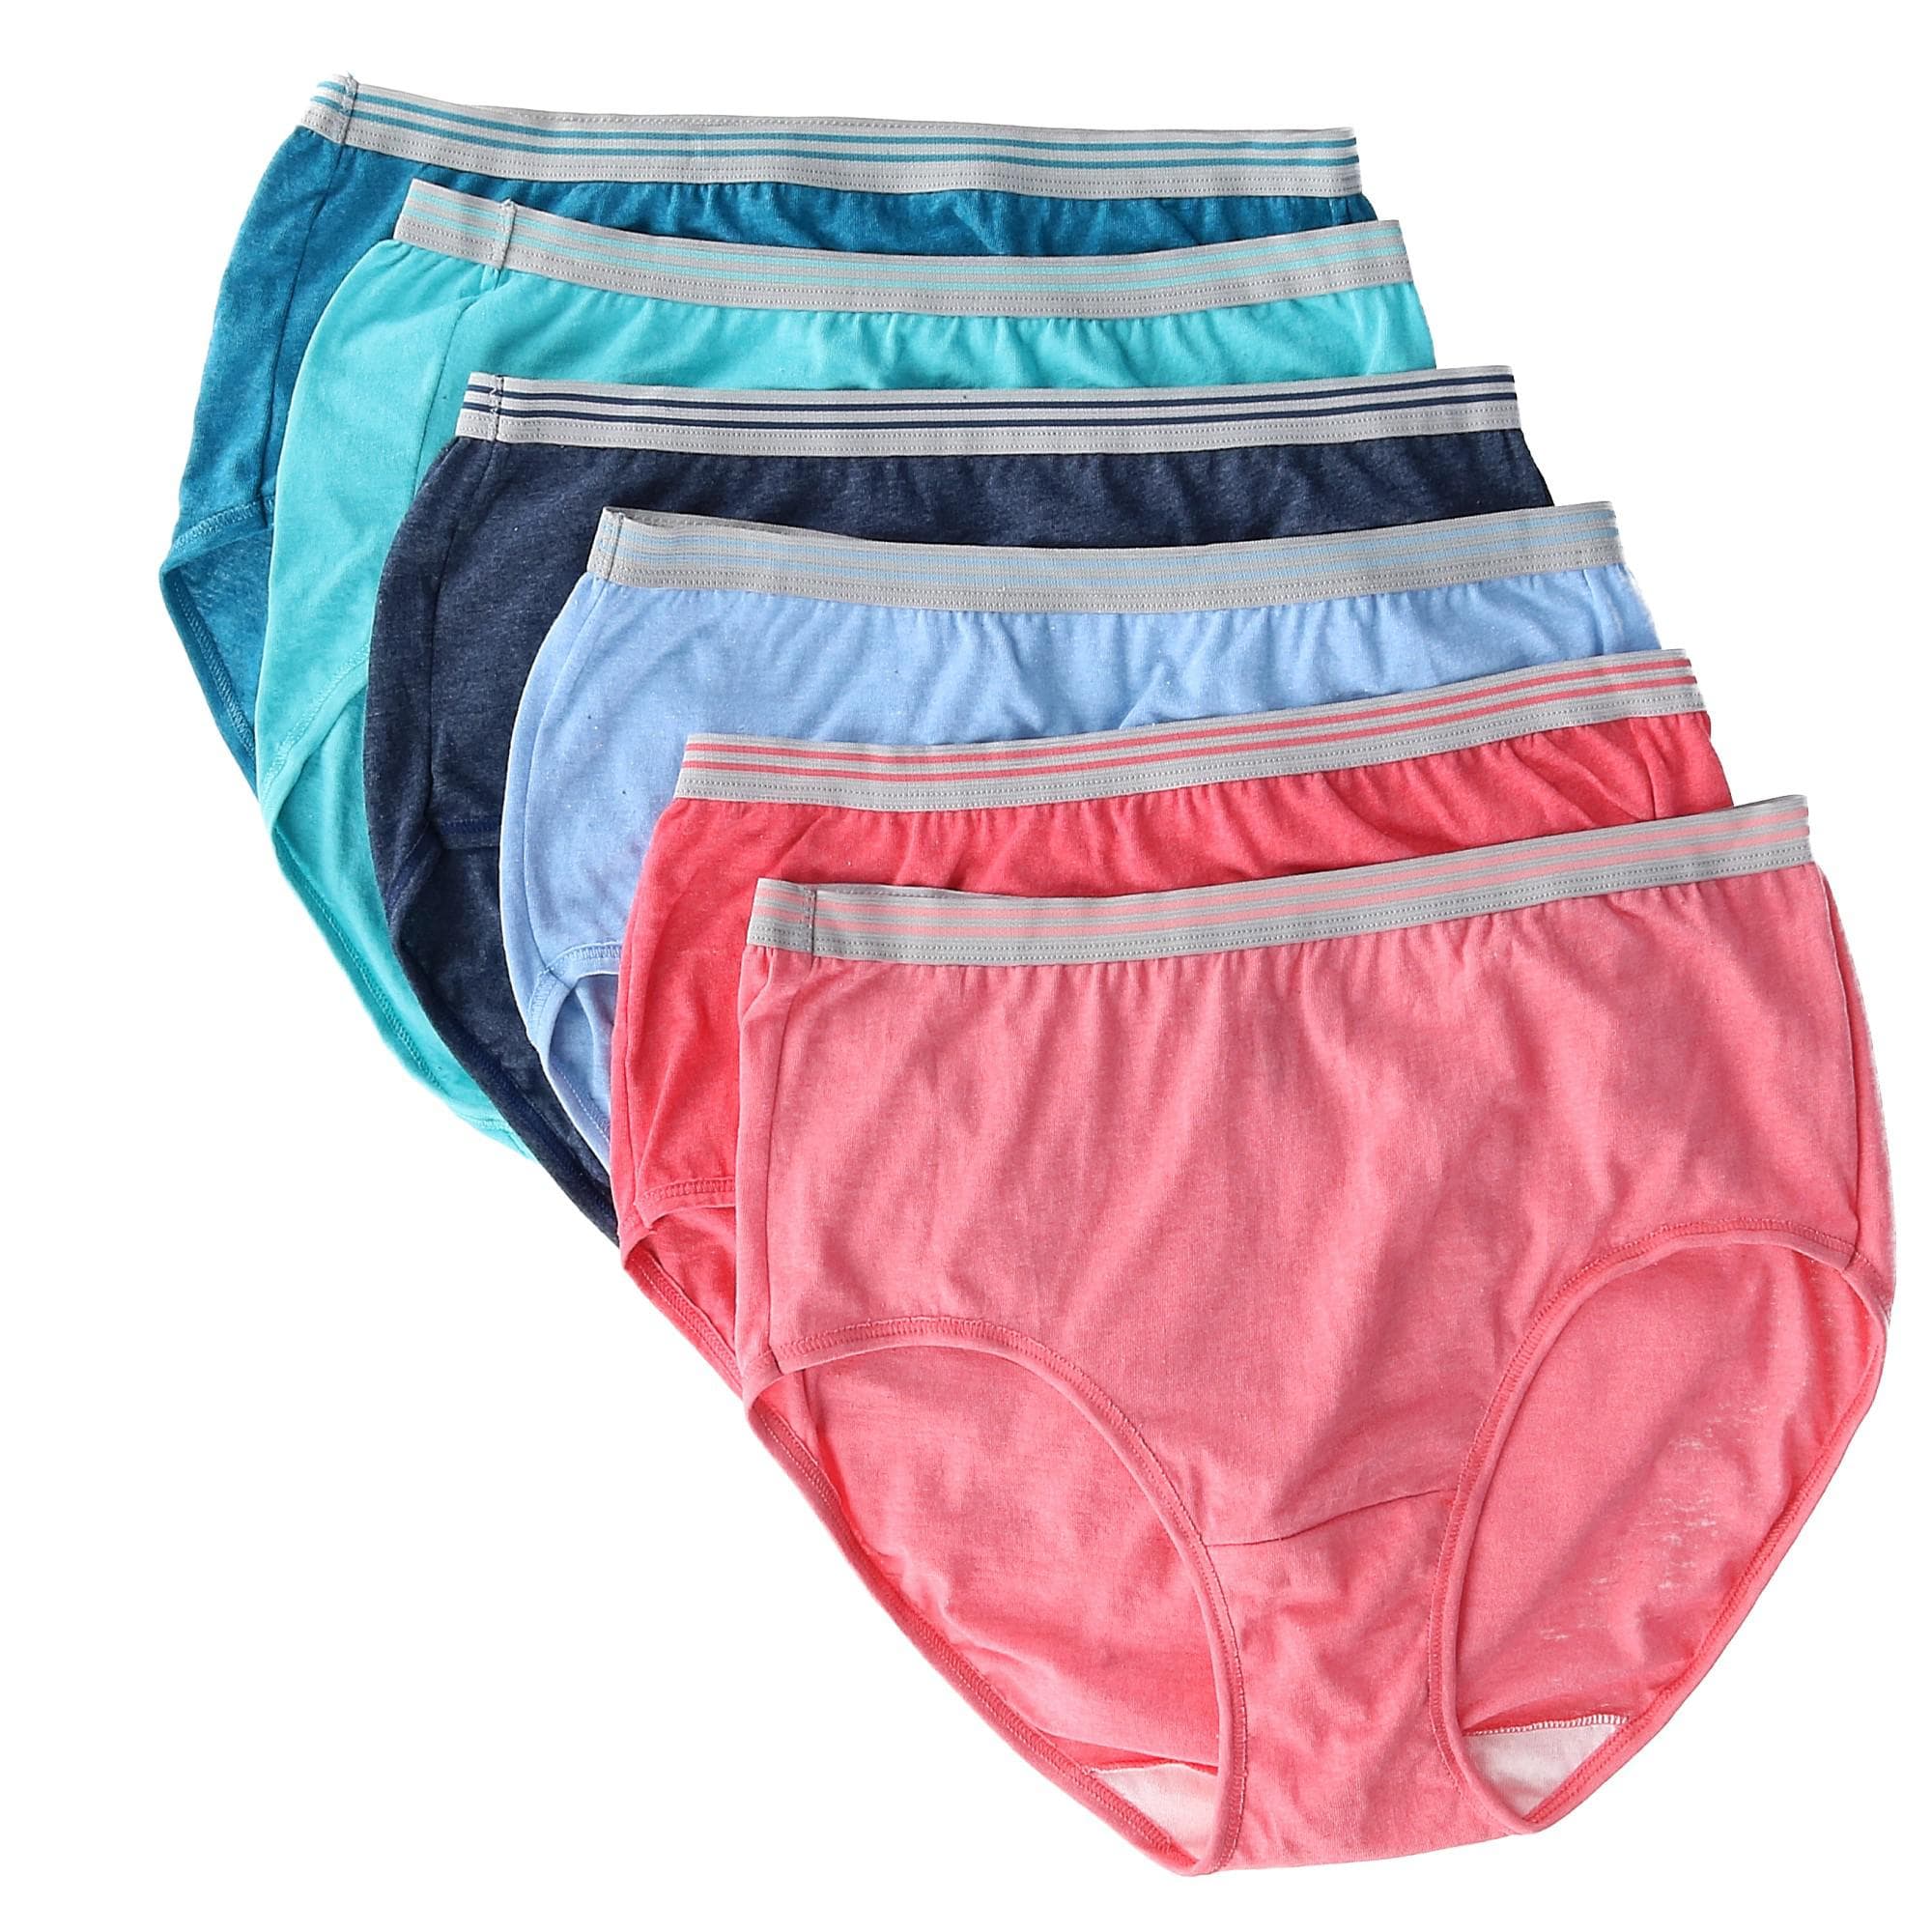 Fit for Me Women's Plus Microfiber Brief Underwear, 5 Pack